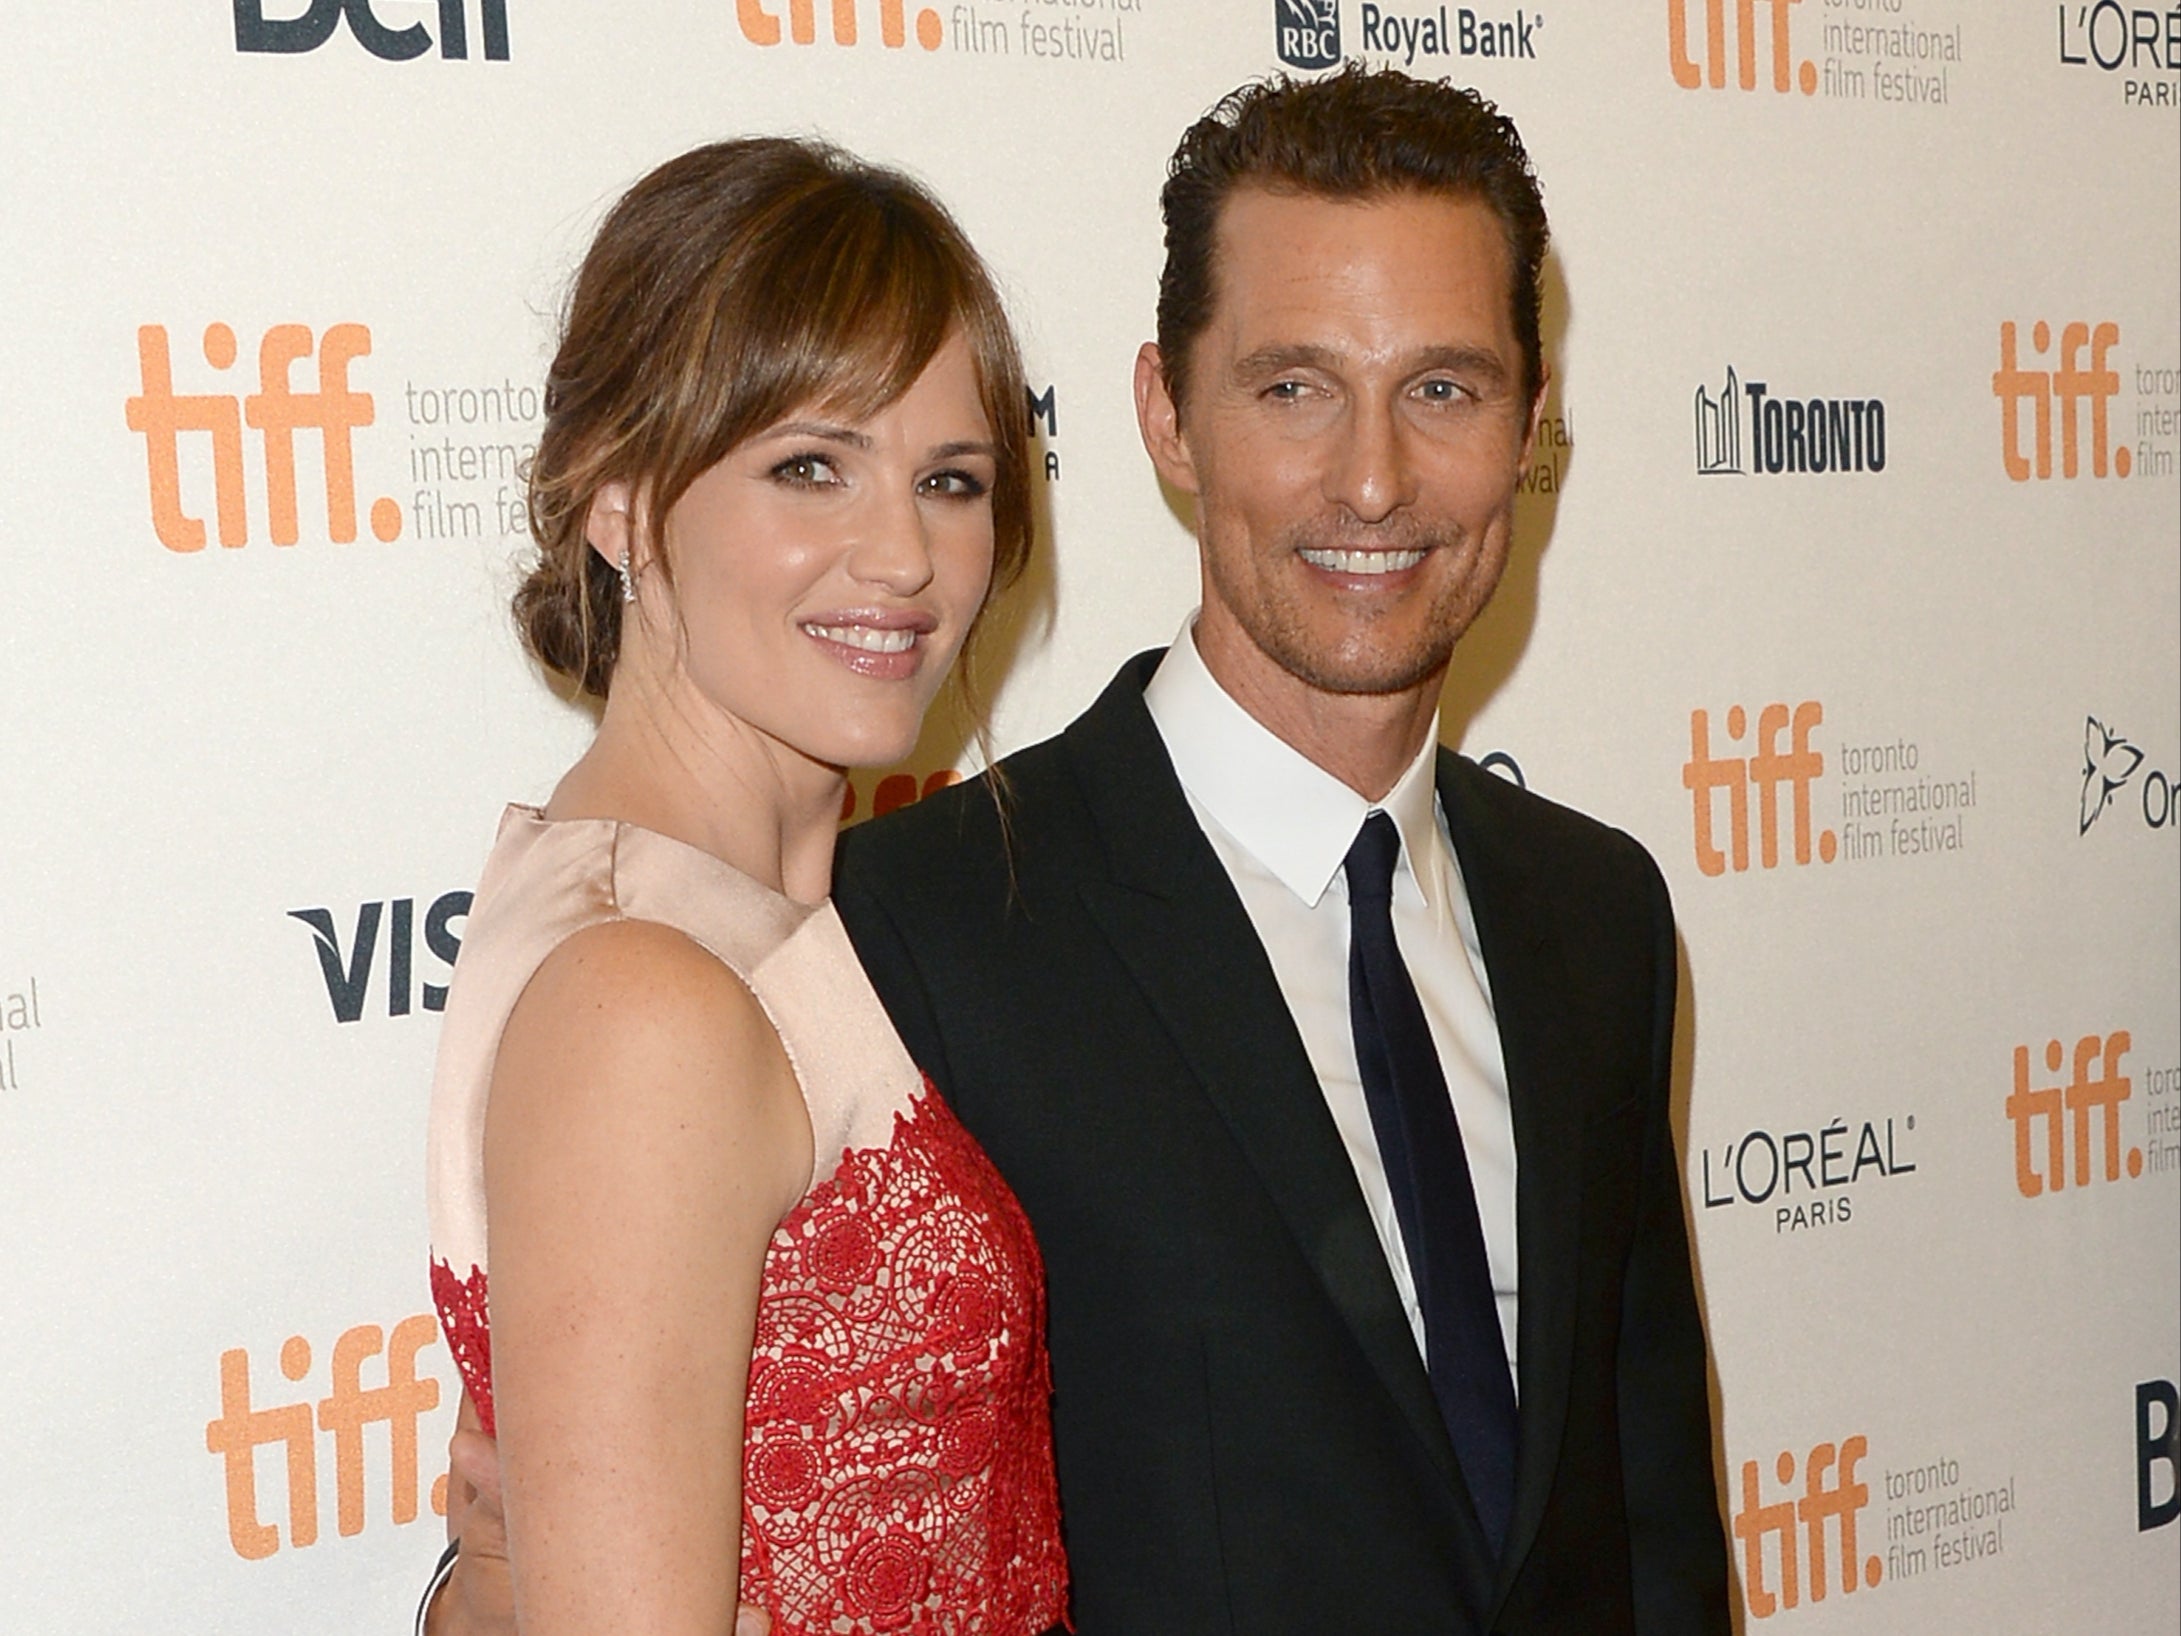 Jennifer Garner recalls how Matthew McConaughey helped her breast pump on film set